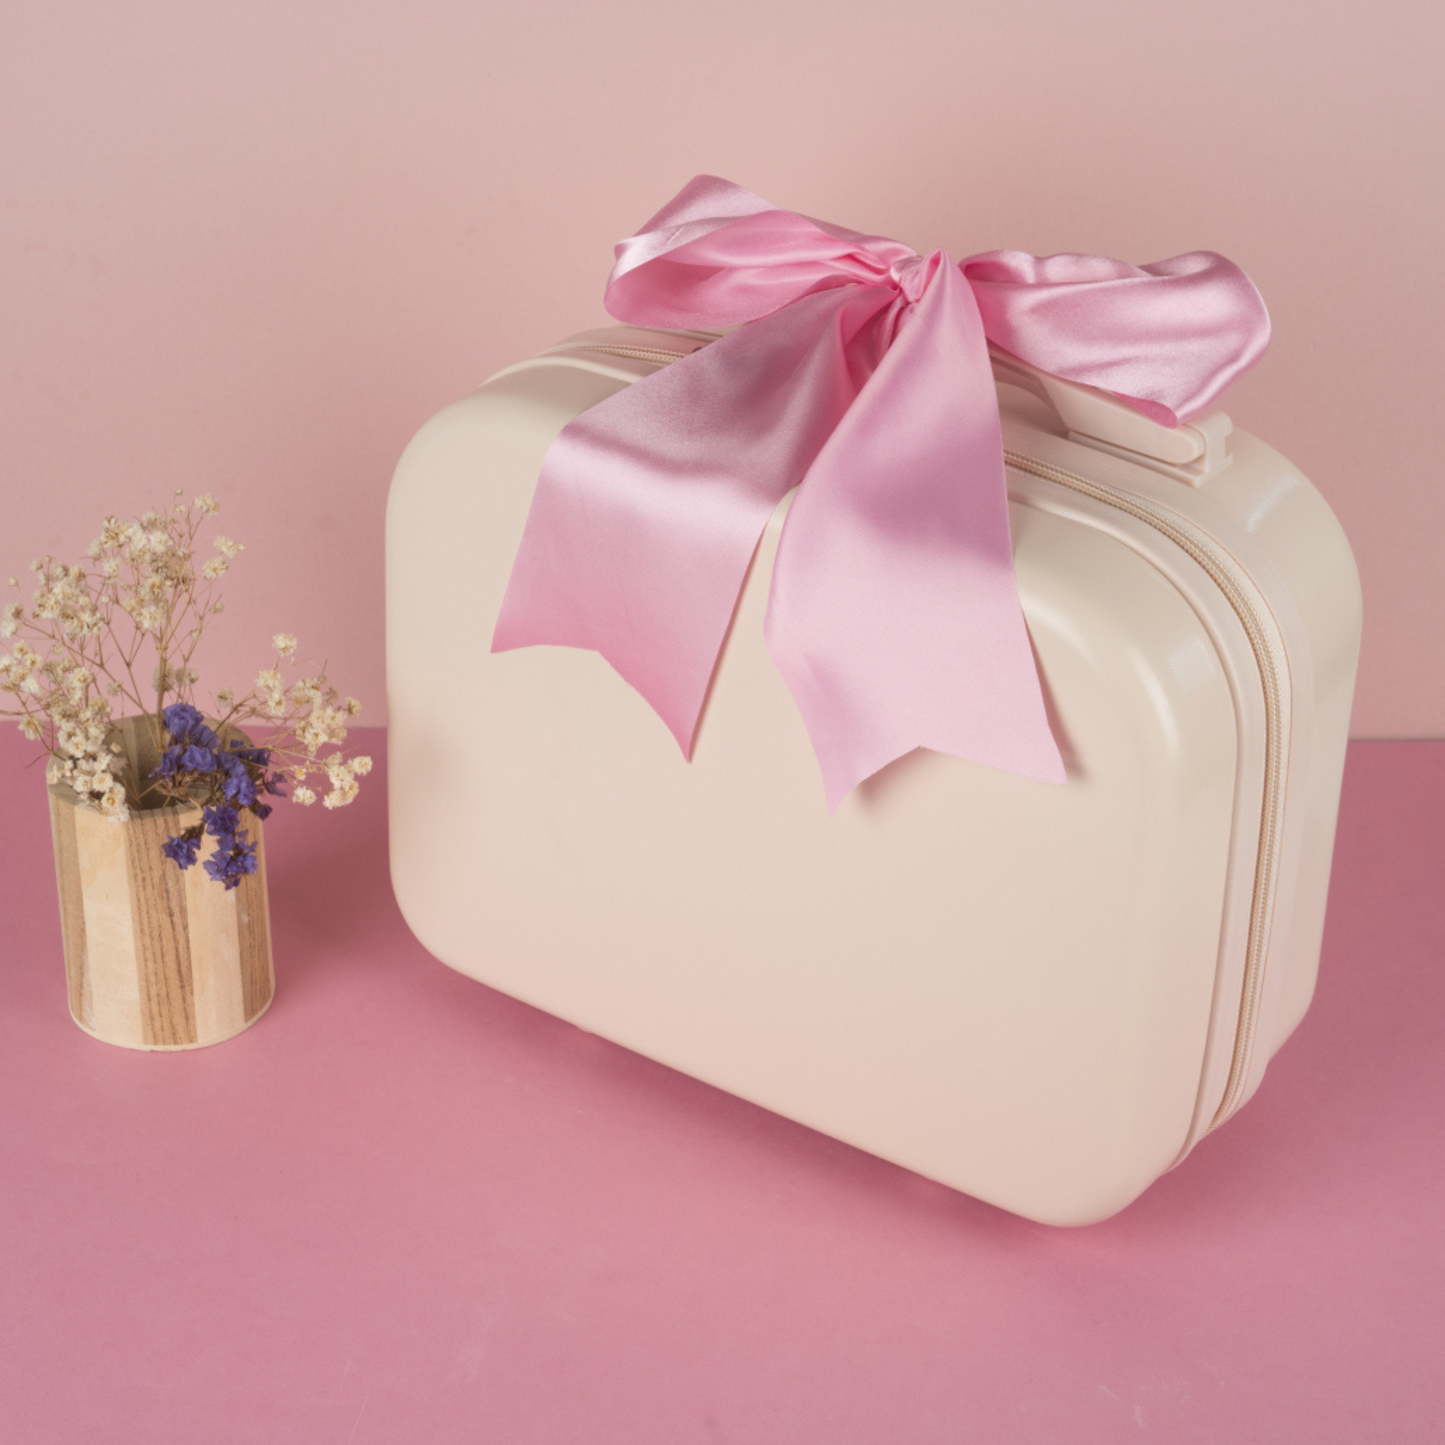 Lovely Rabbit Baby Girl Luggage Gift Set B 3-6 Months